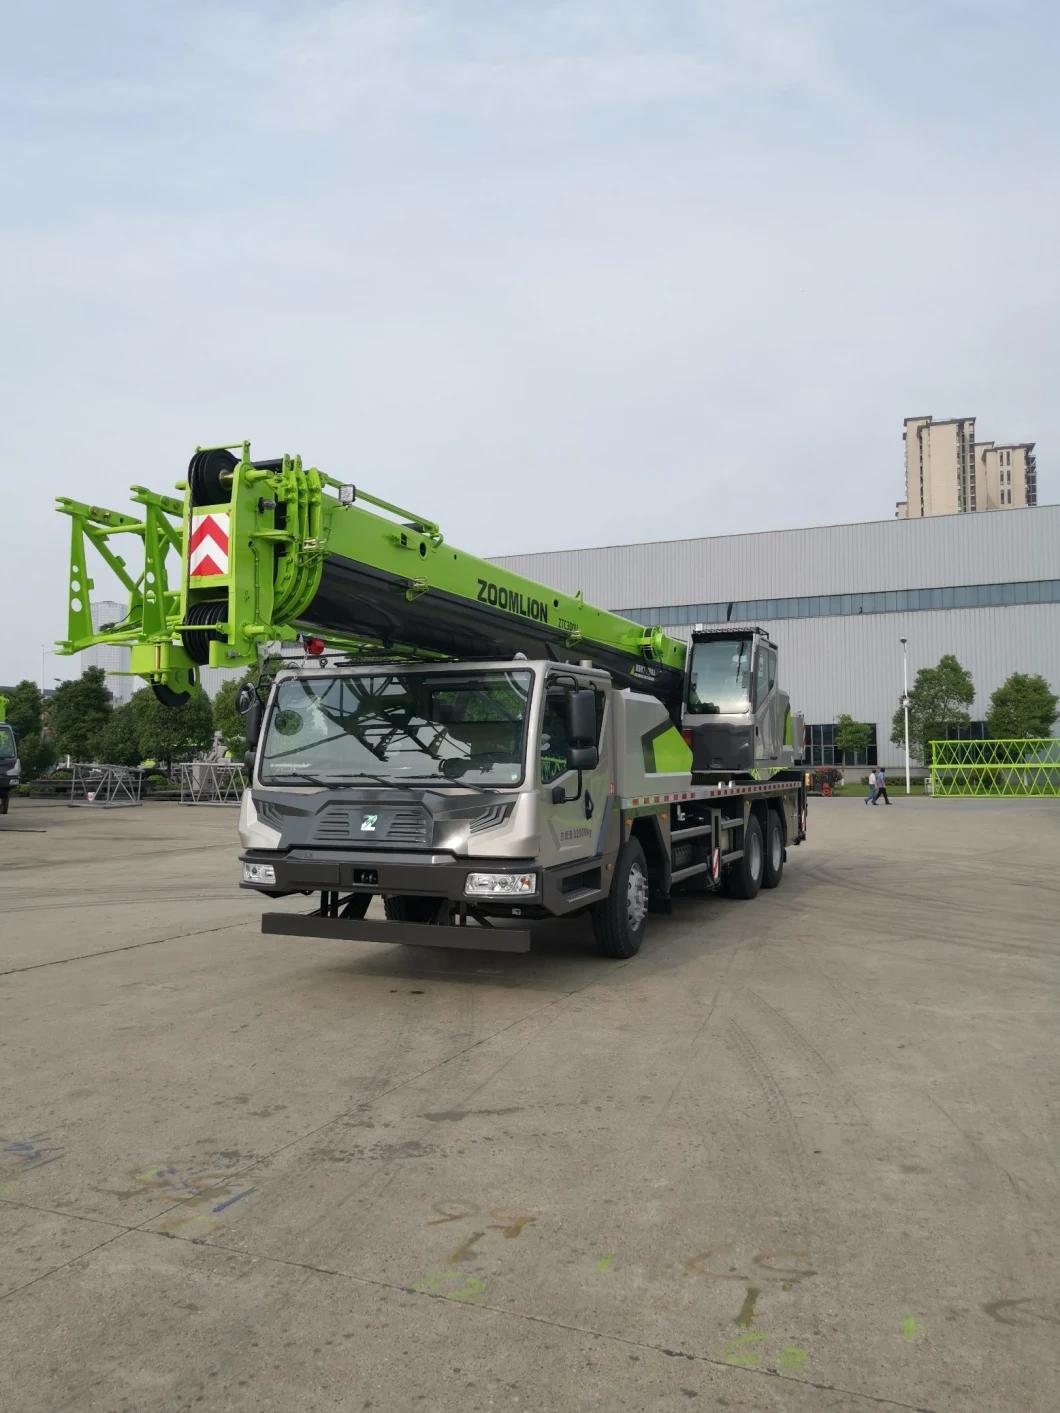 Zoomlion 30ton Truck Crane Ztc300e552 Telescopic Mobile Cranes Price